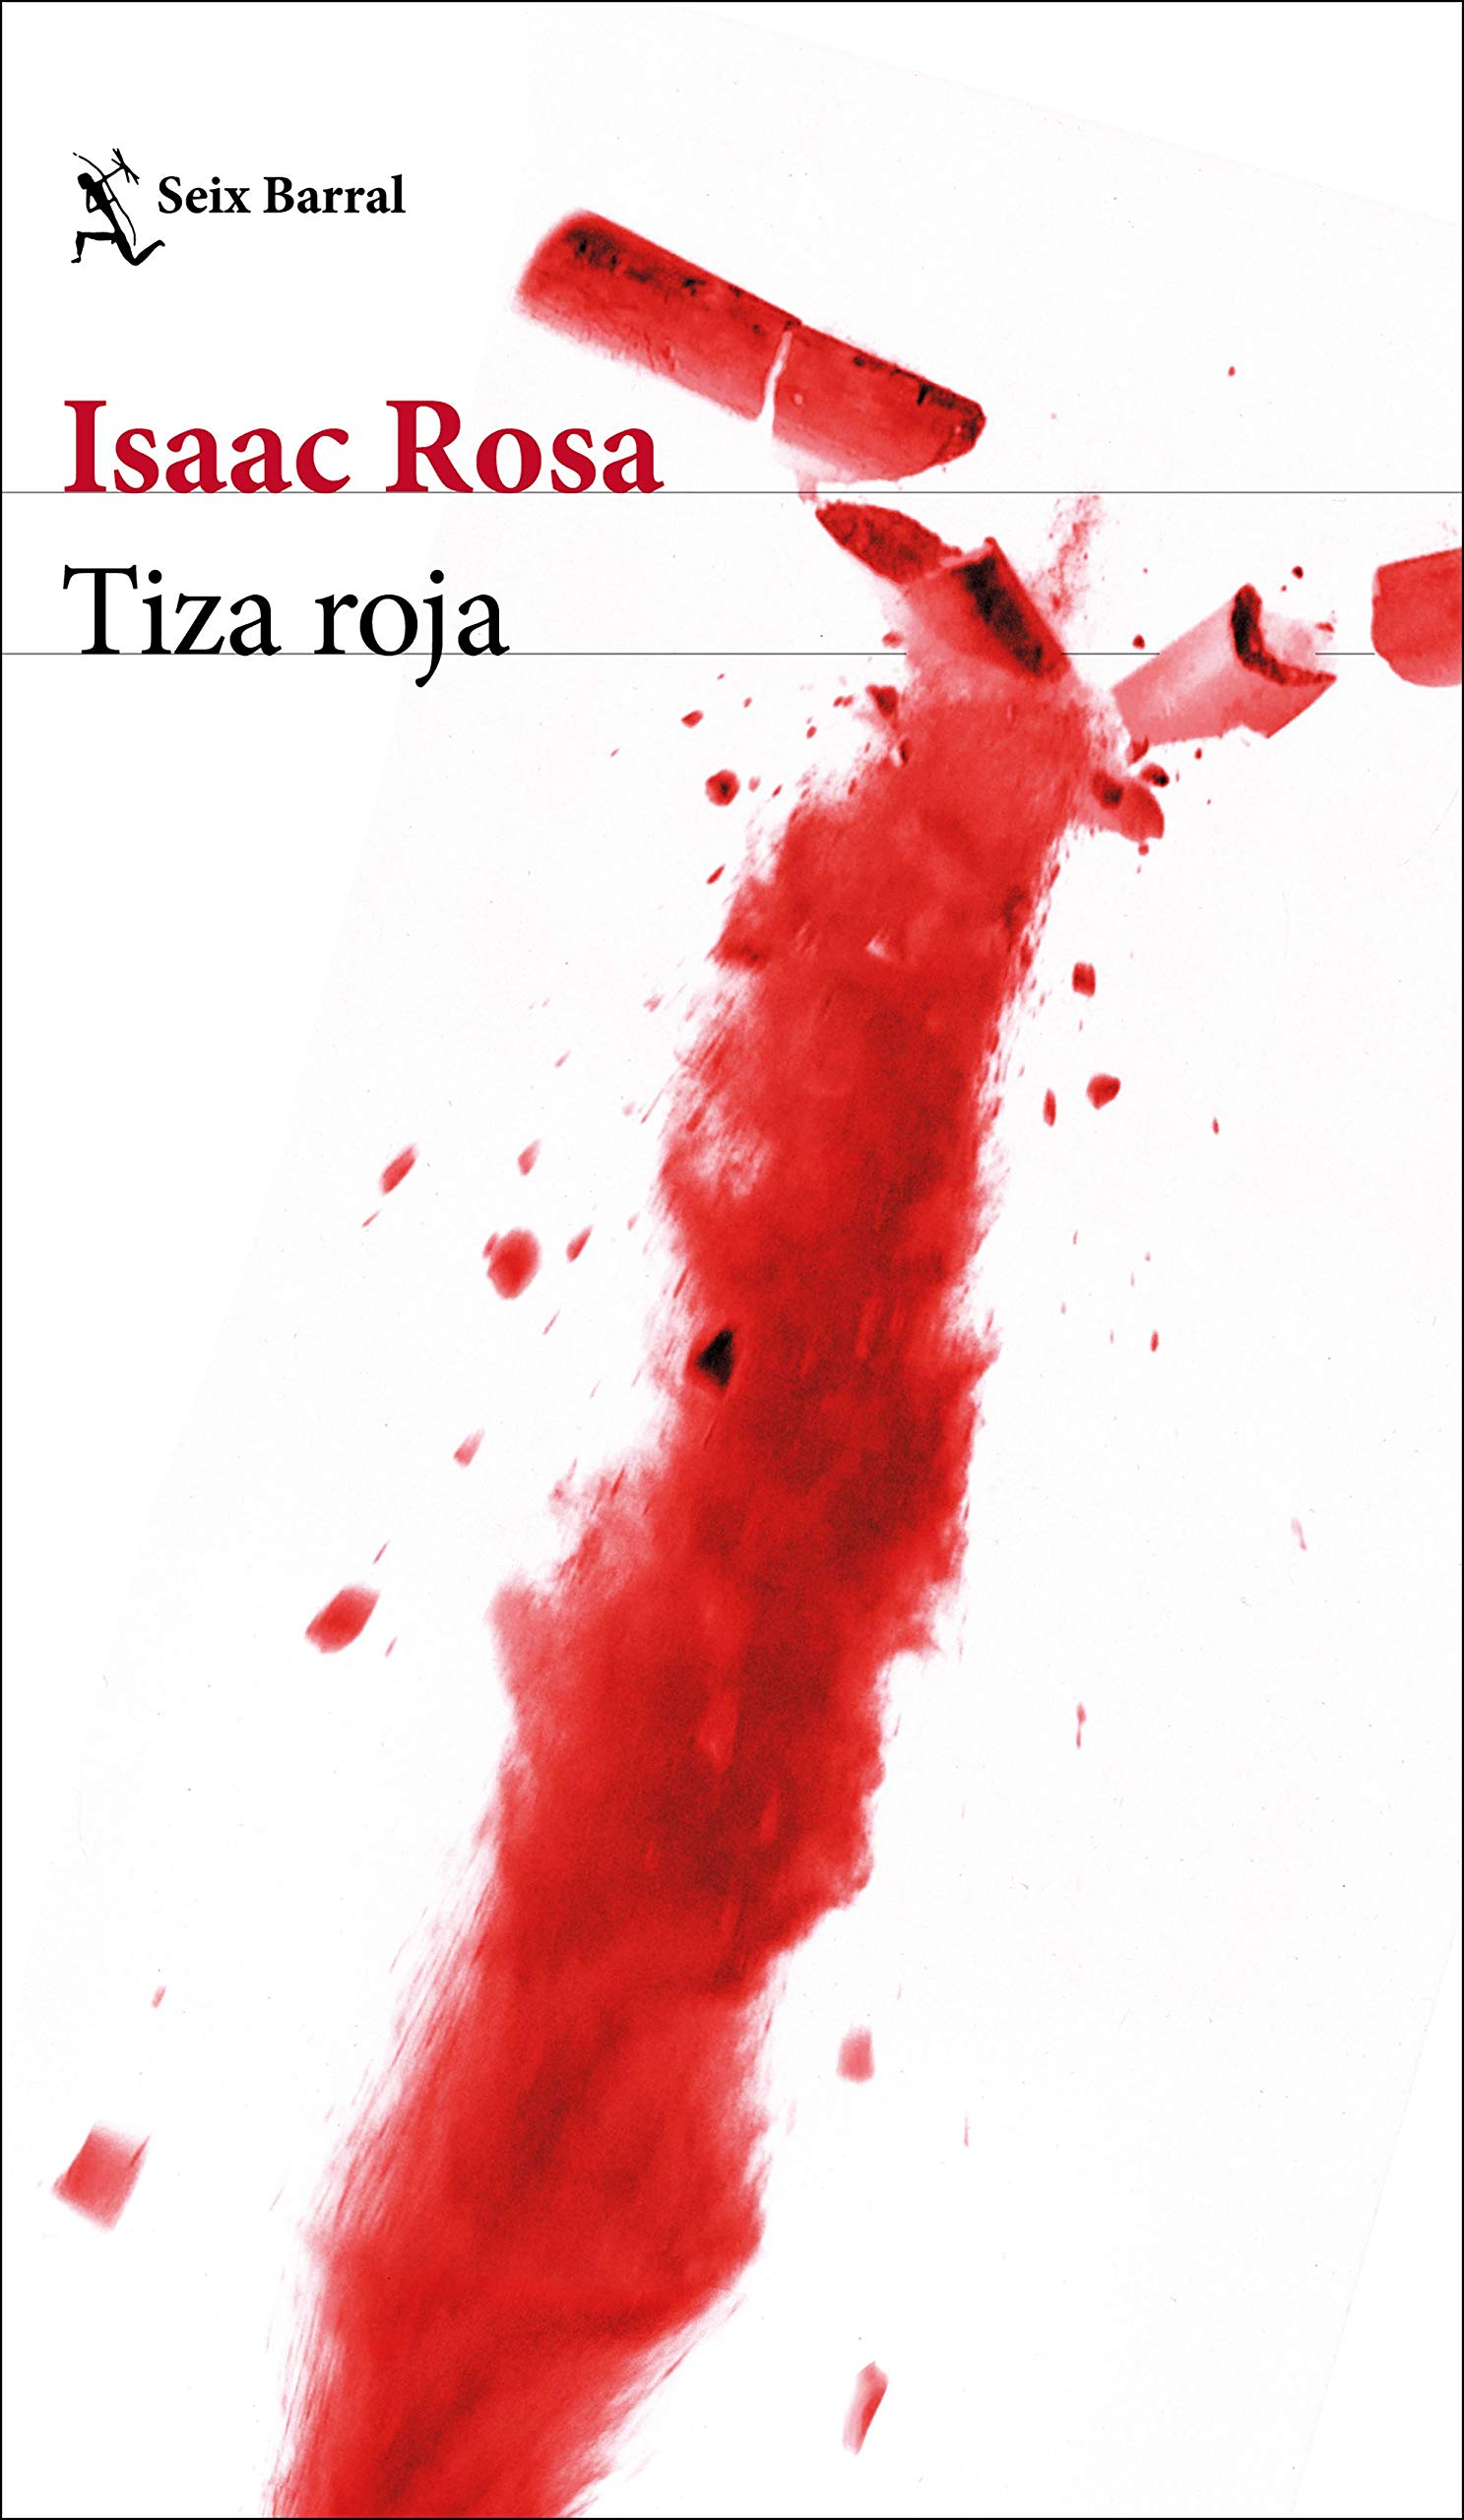 Zenda recomienda: Tiza roja, de Isaac Rosa